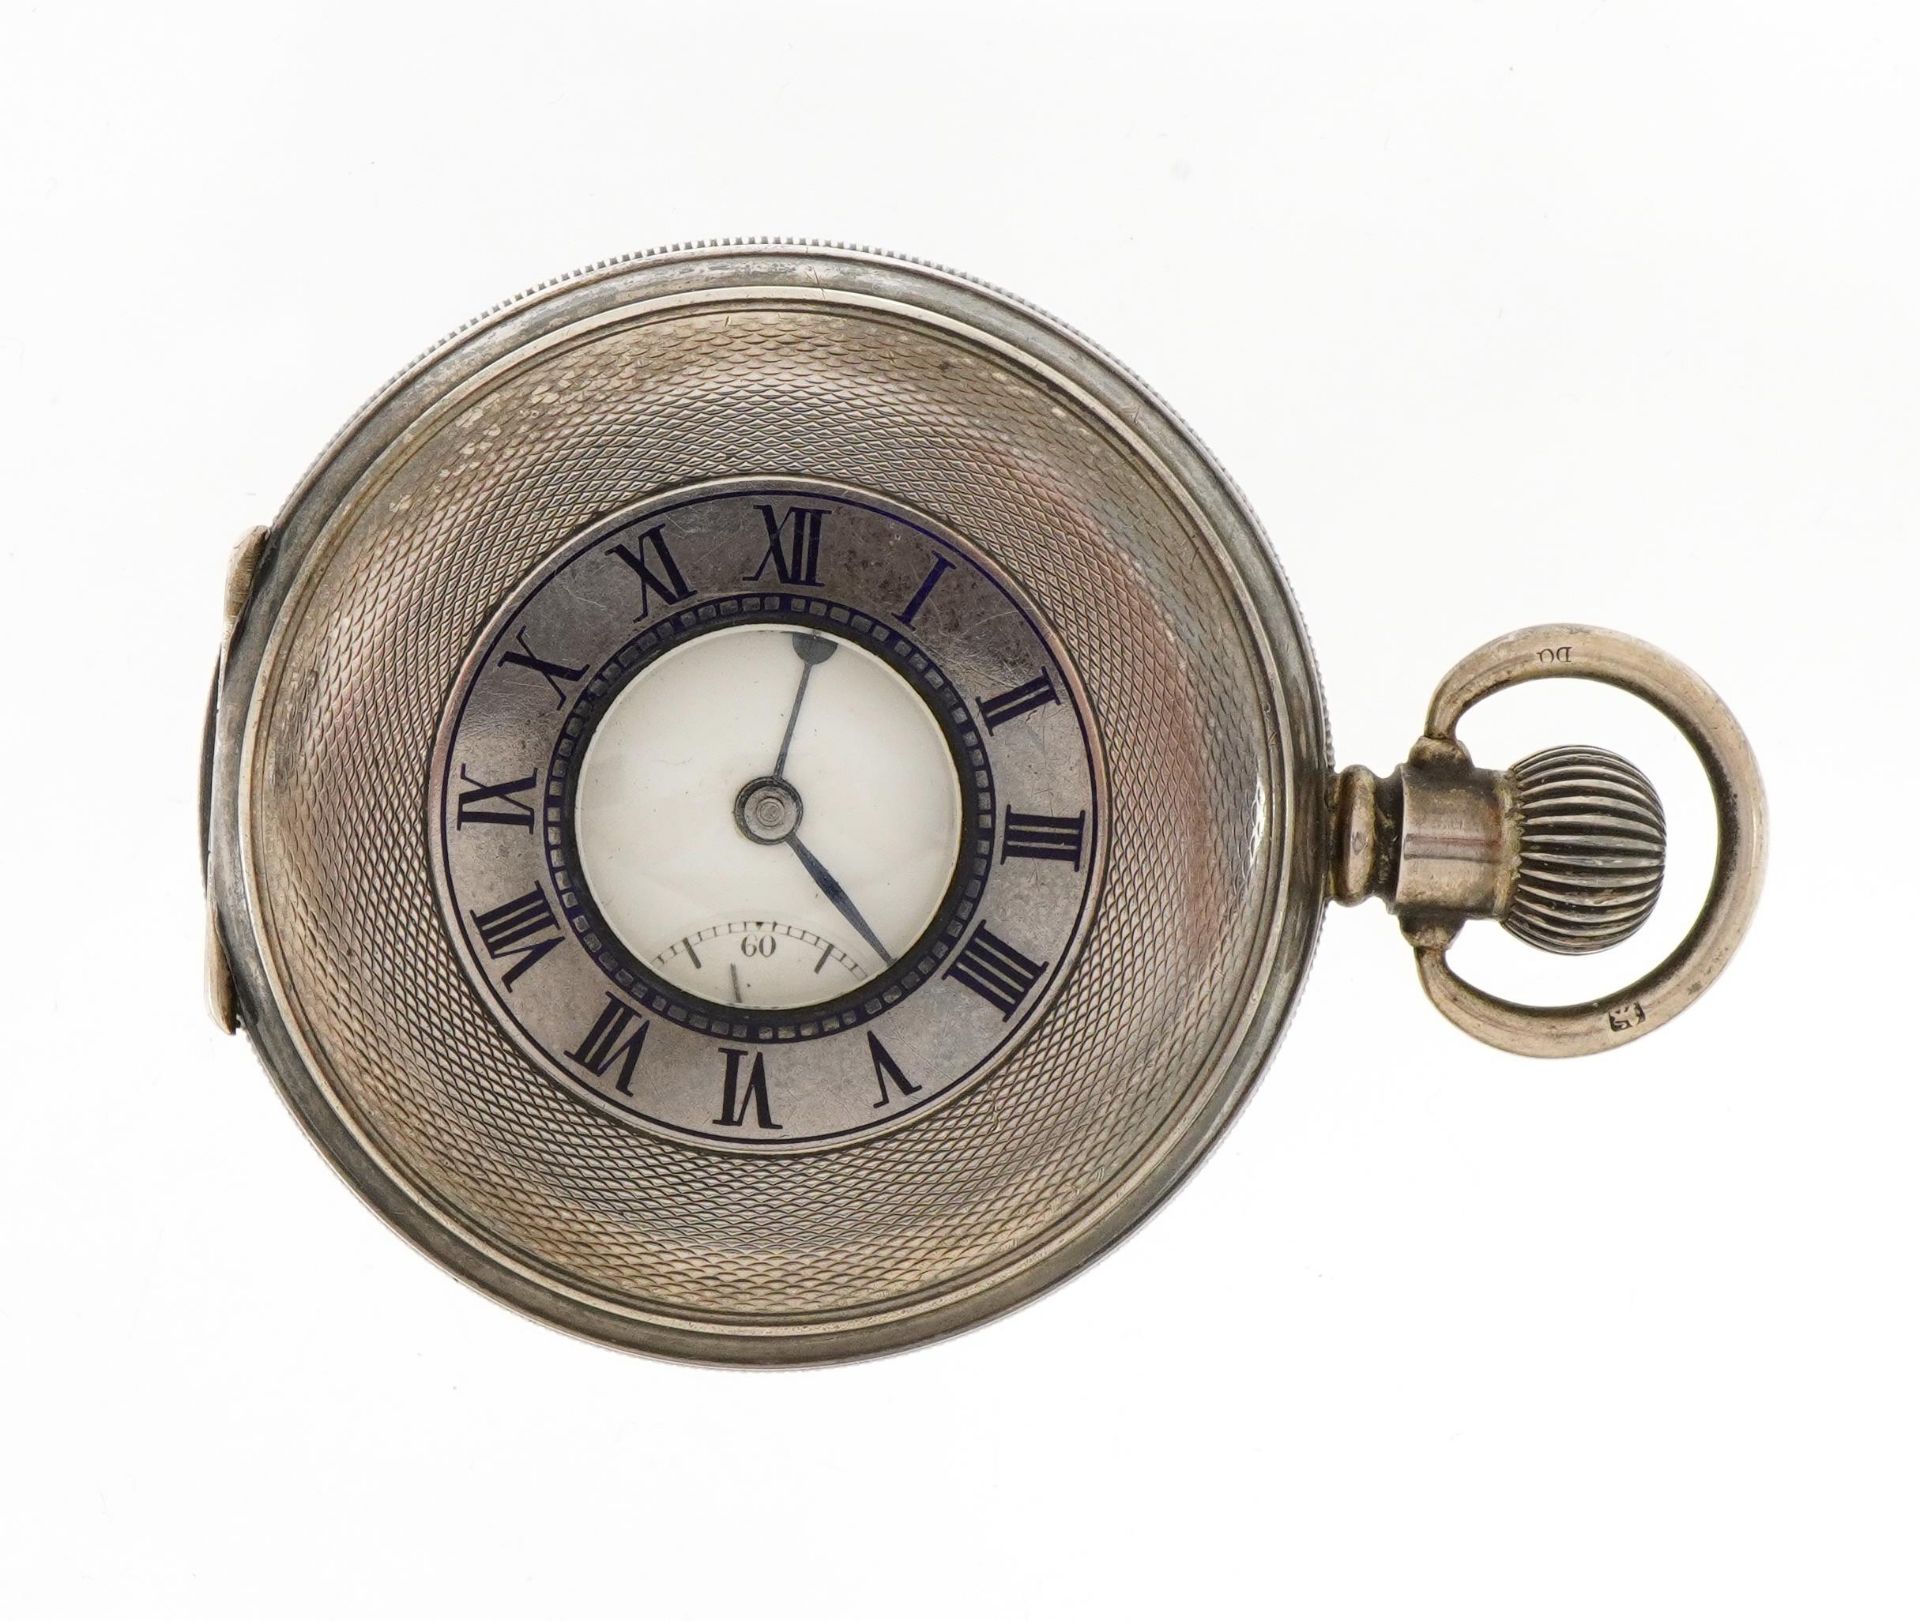 James Walker, gentlemen's James Walker silver and enamel half hunter pocket watch, the dial